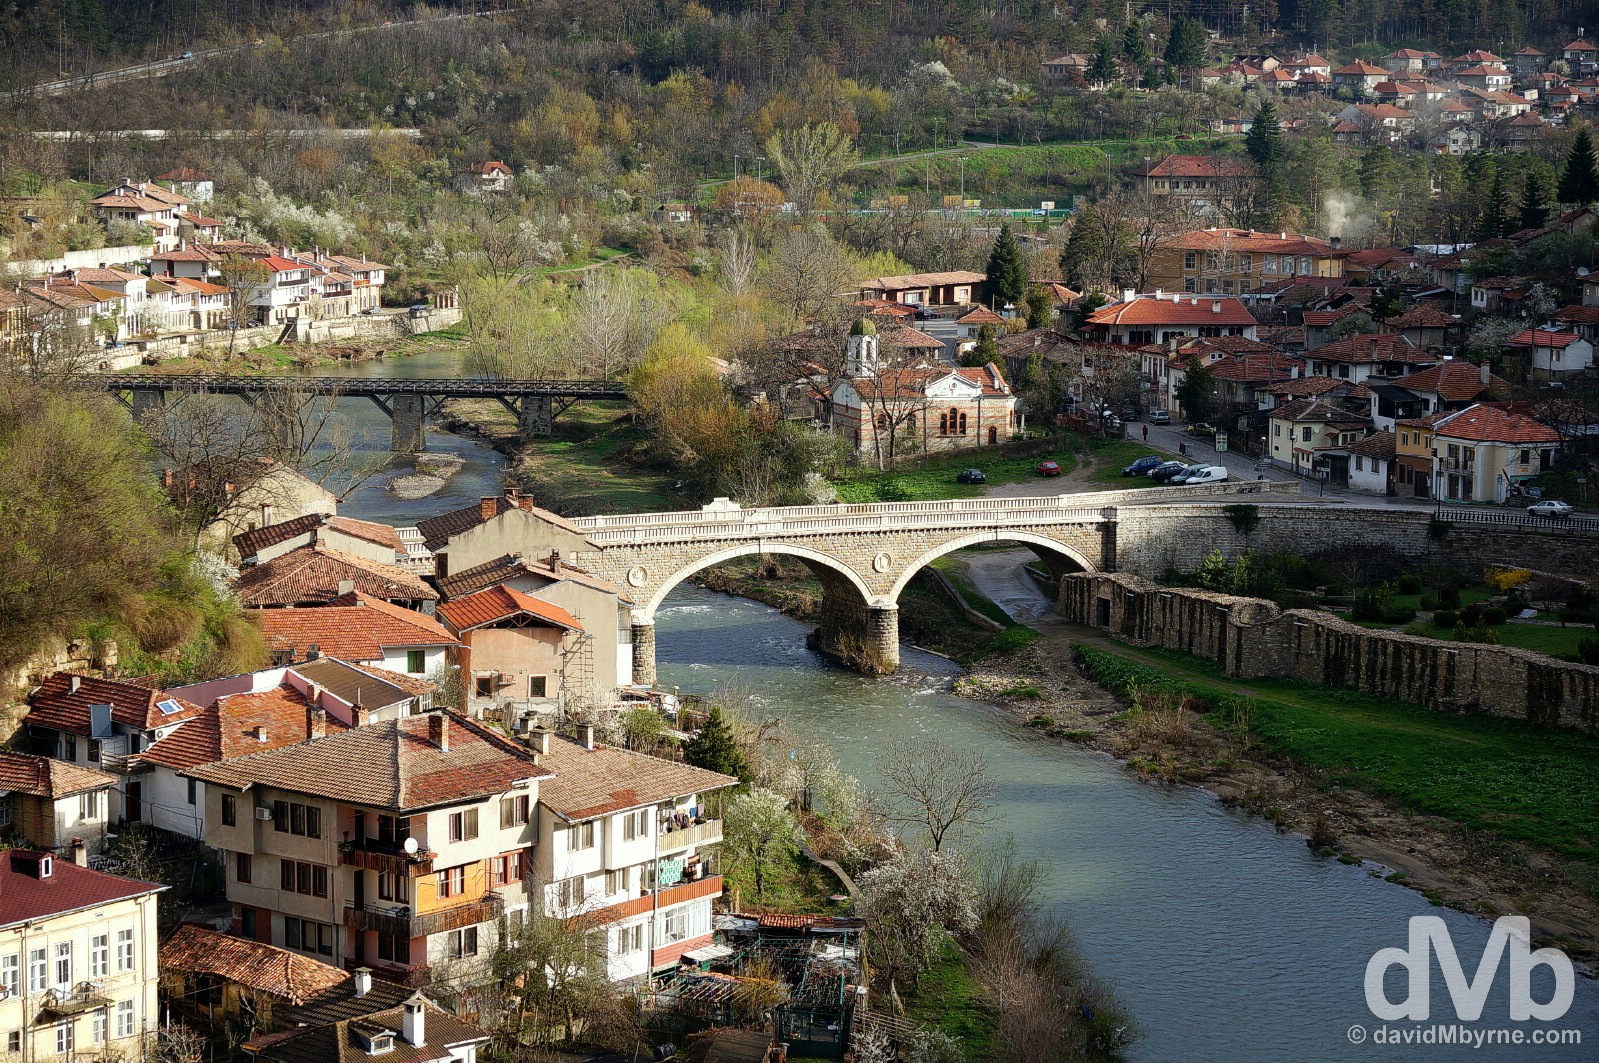 The Asenova district & the Yantra River as seen from the Tsarevets Fortress in Veliko Tarnovo, Bulgaria. March 31, 2015.